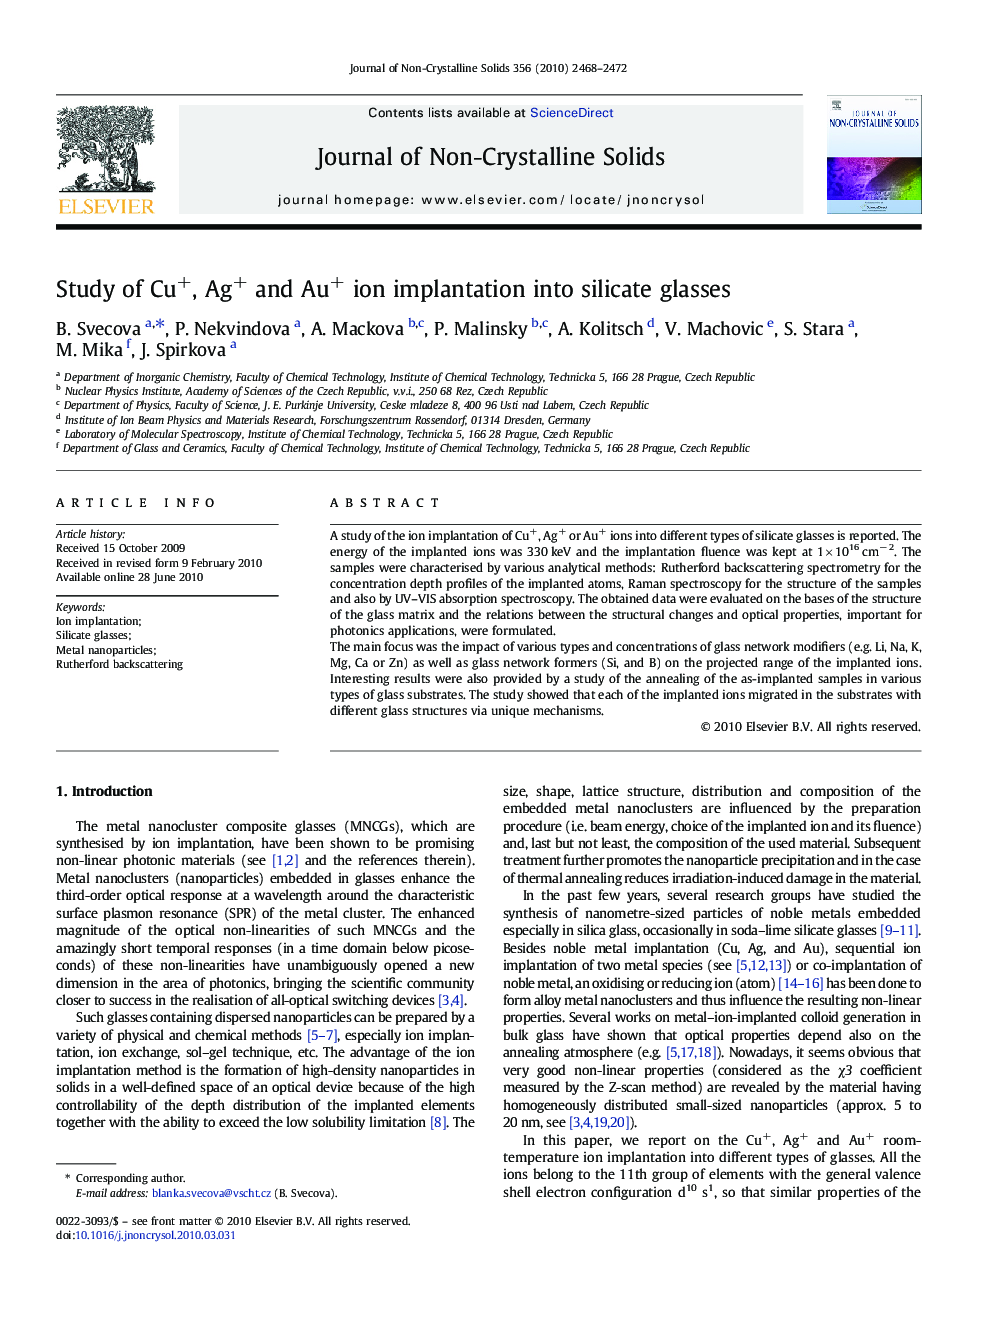 Study of Cu+, Ag+ and Au+ ion implantation into silicate glasses